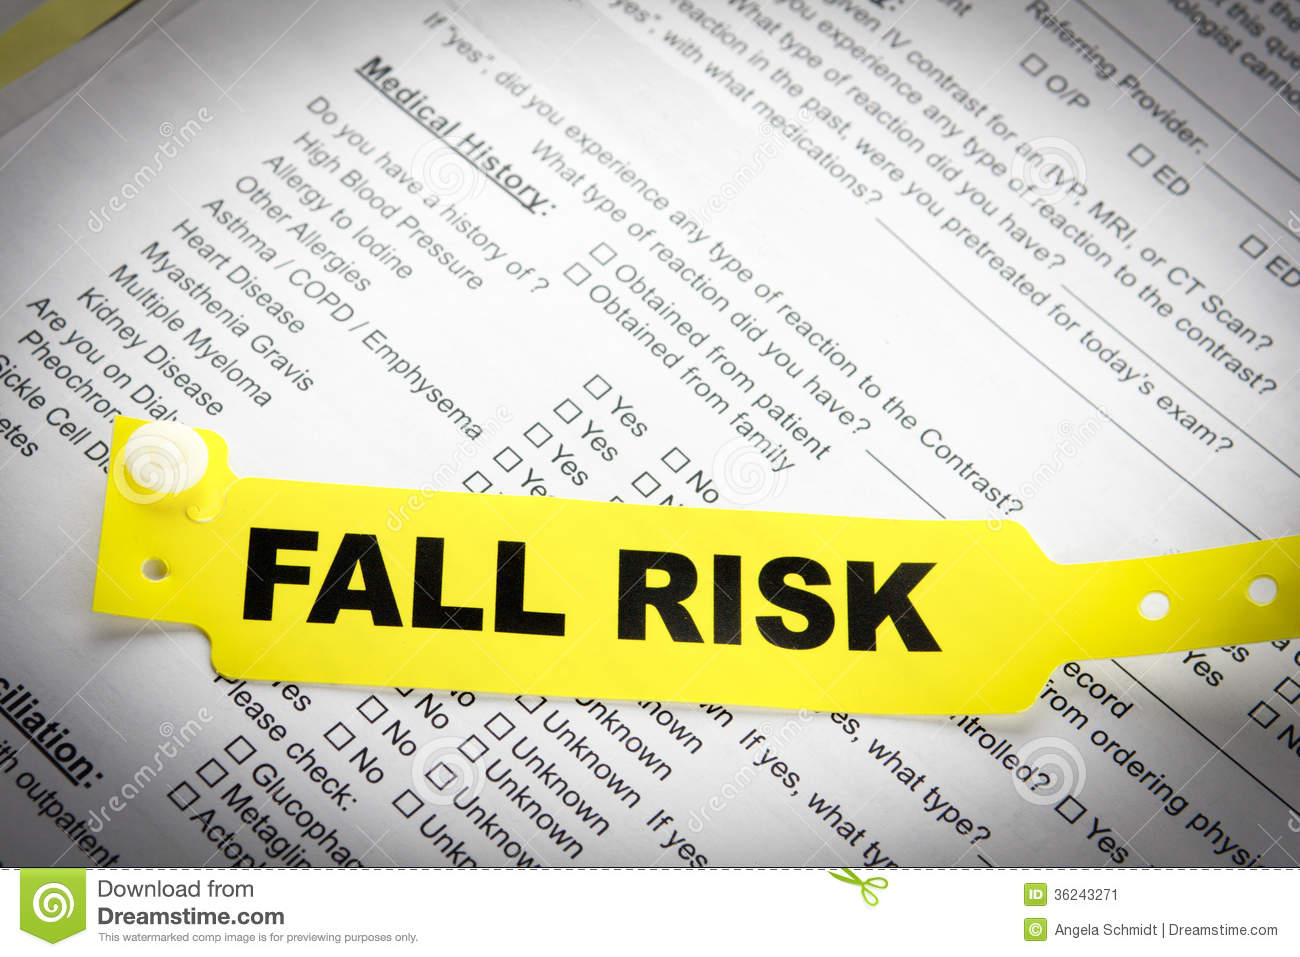 Fall Risk Patient Bracelet Stock Image   Image  36243271